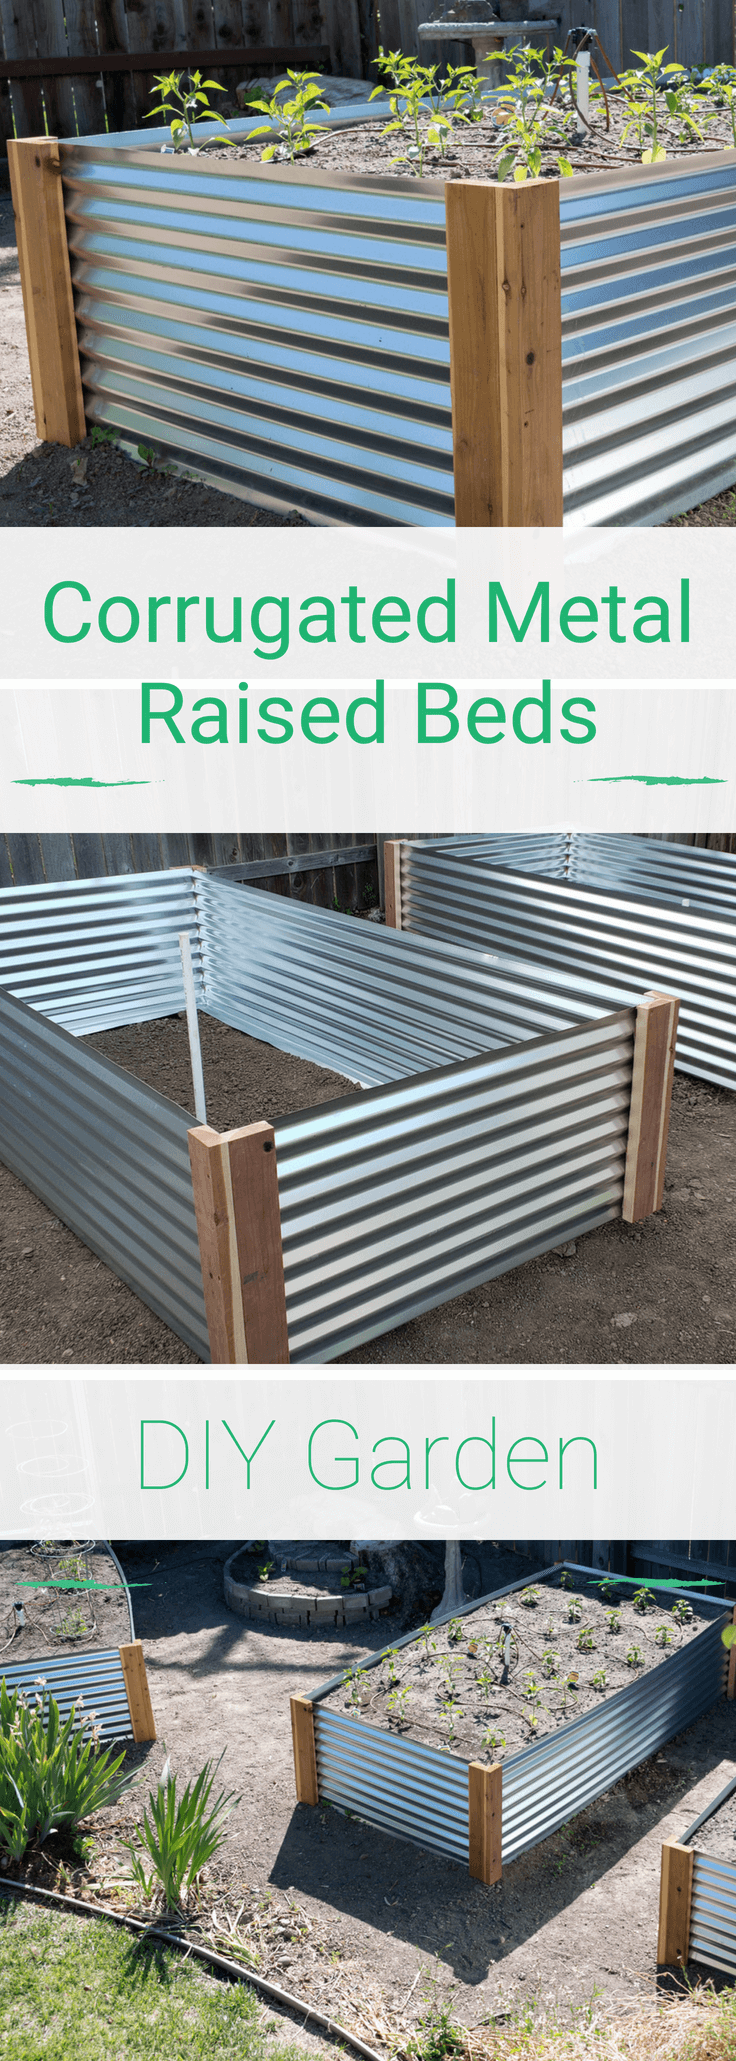 Metal raised garden bed corrugated metal pinterest